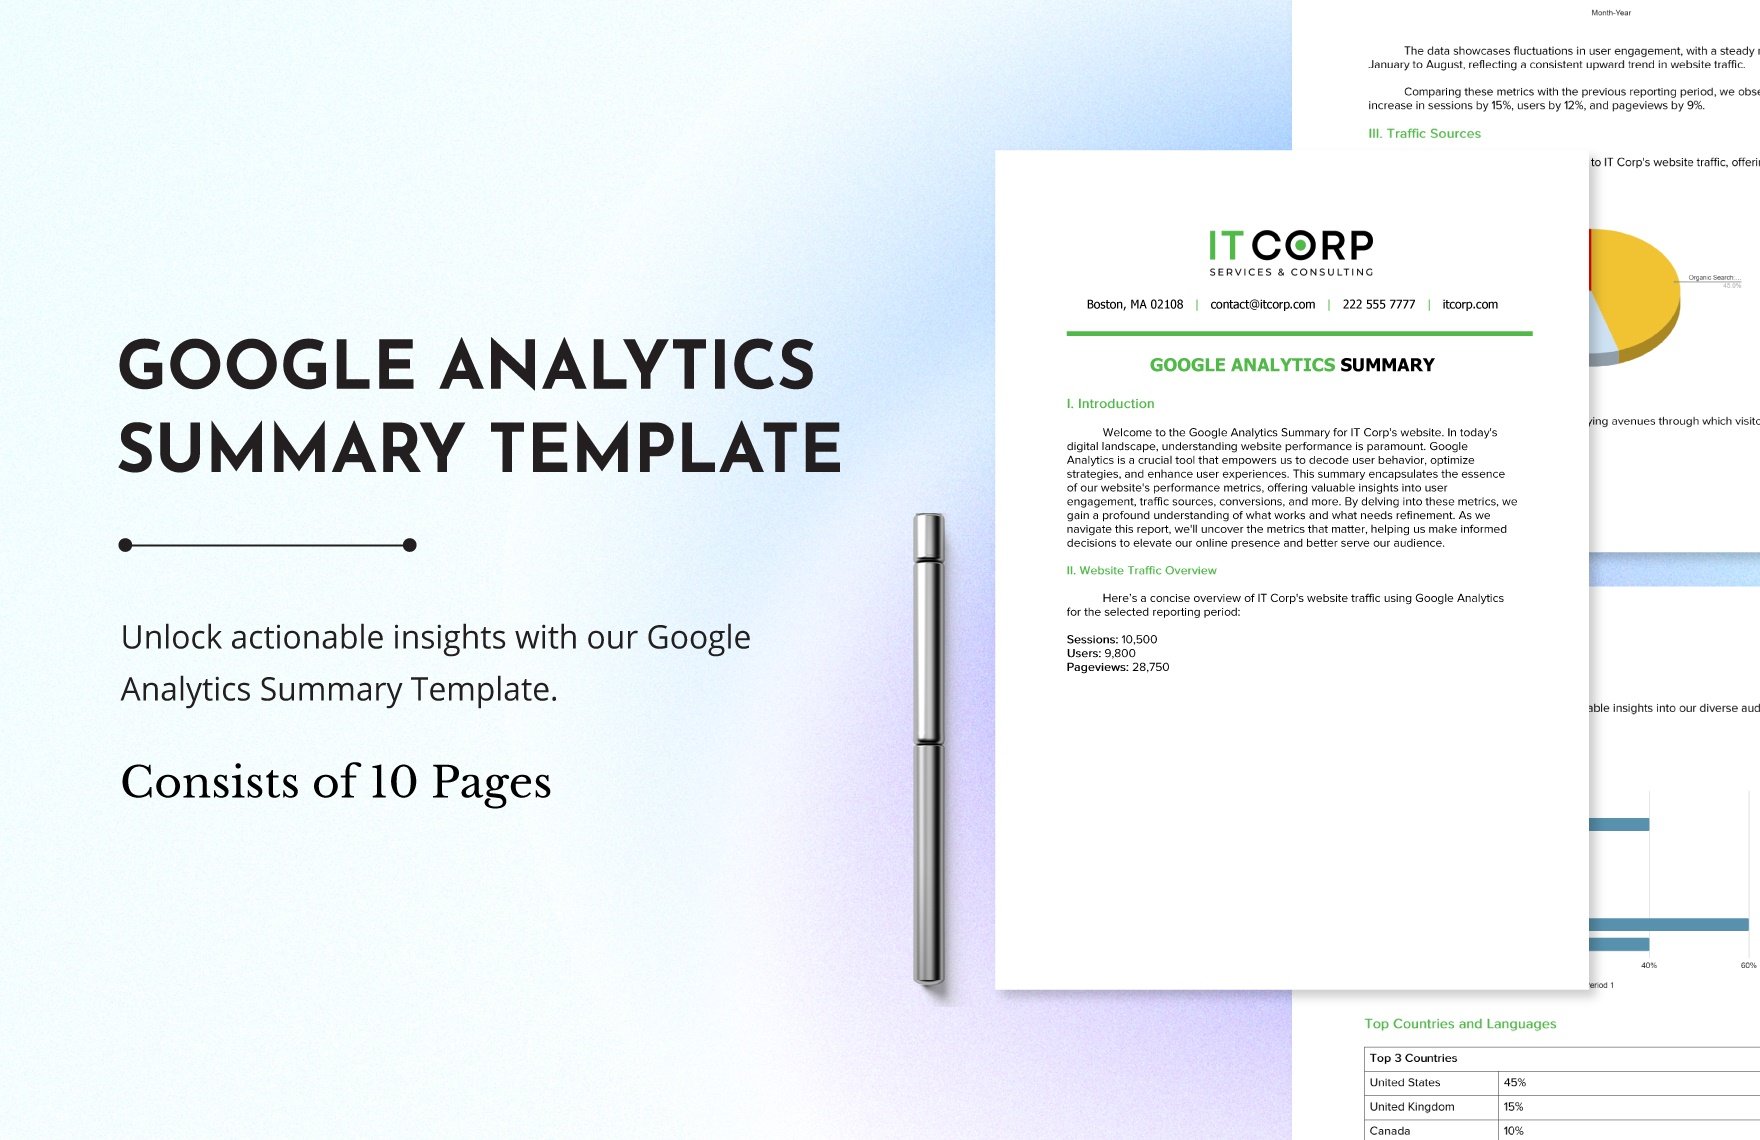 Google Analytics Summary Template